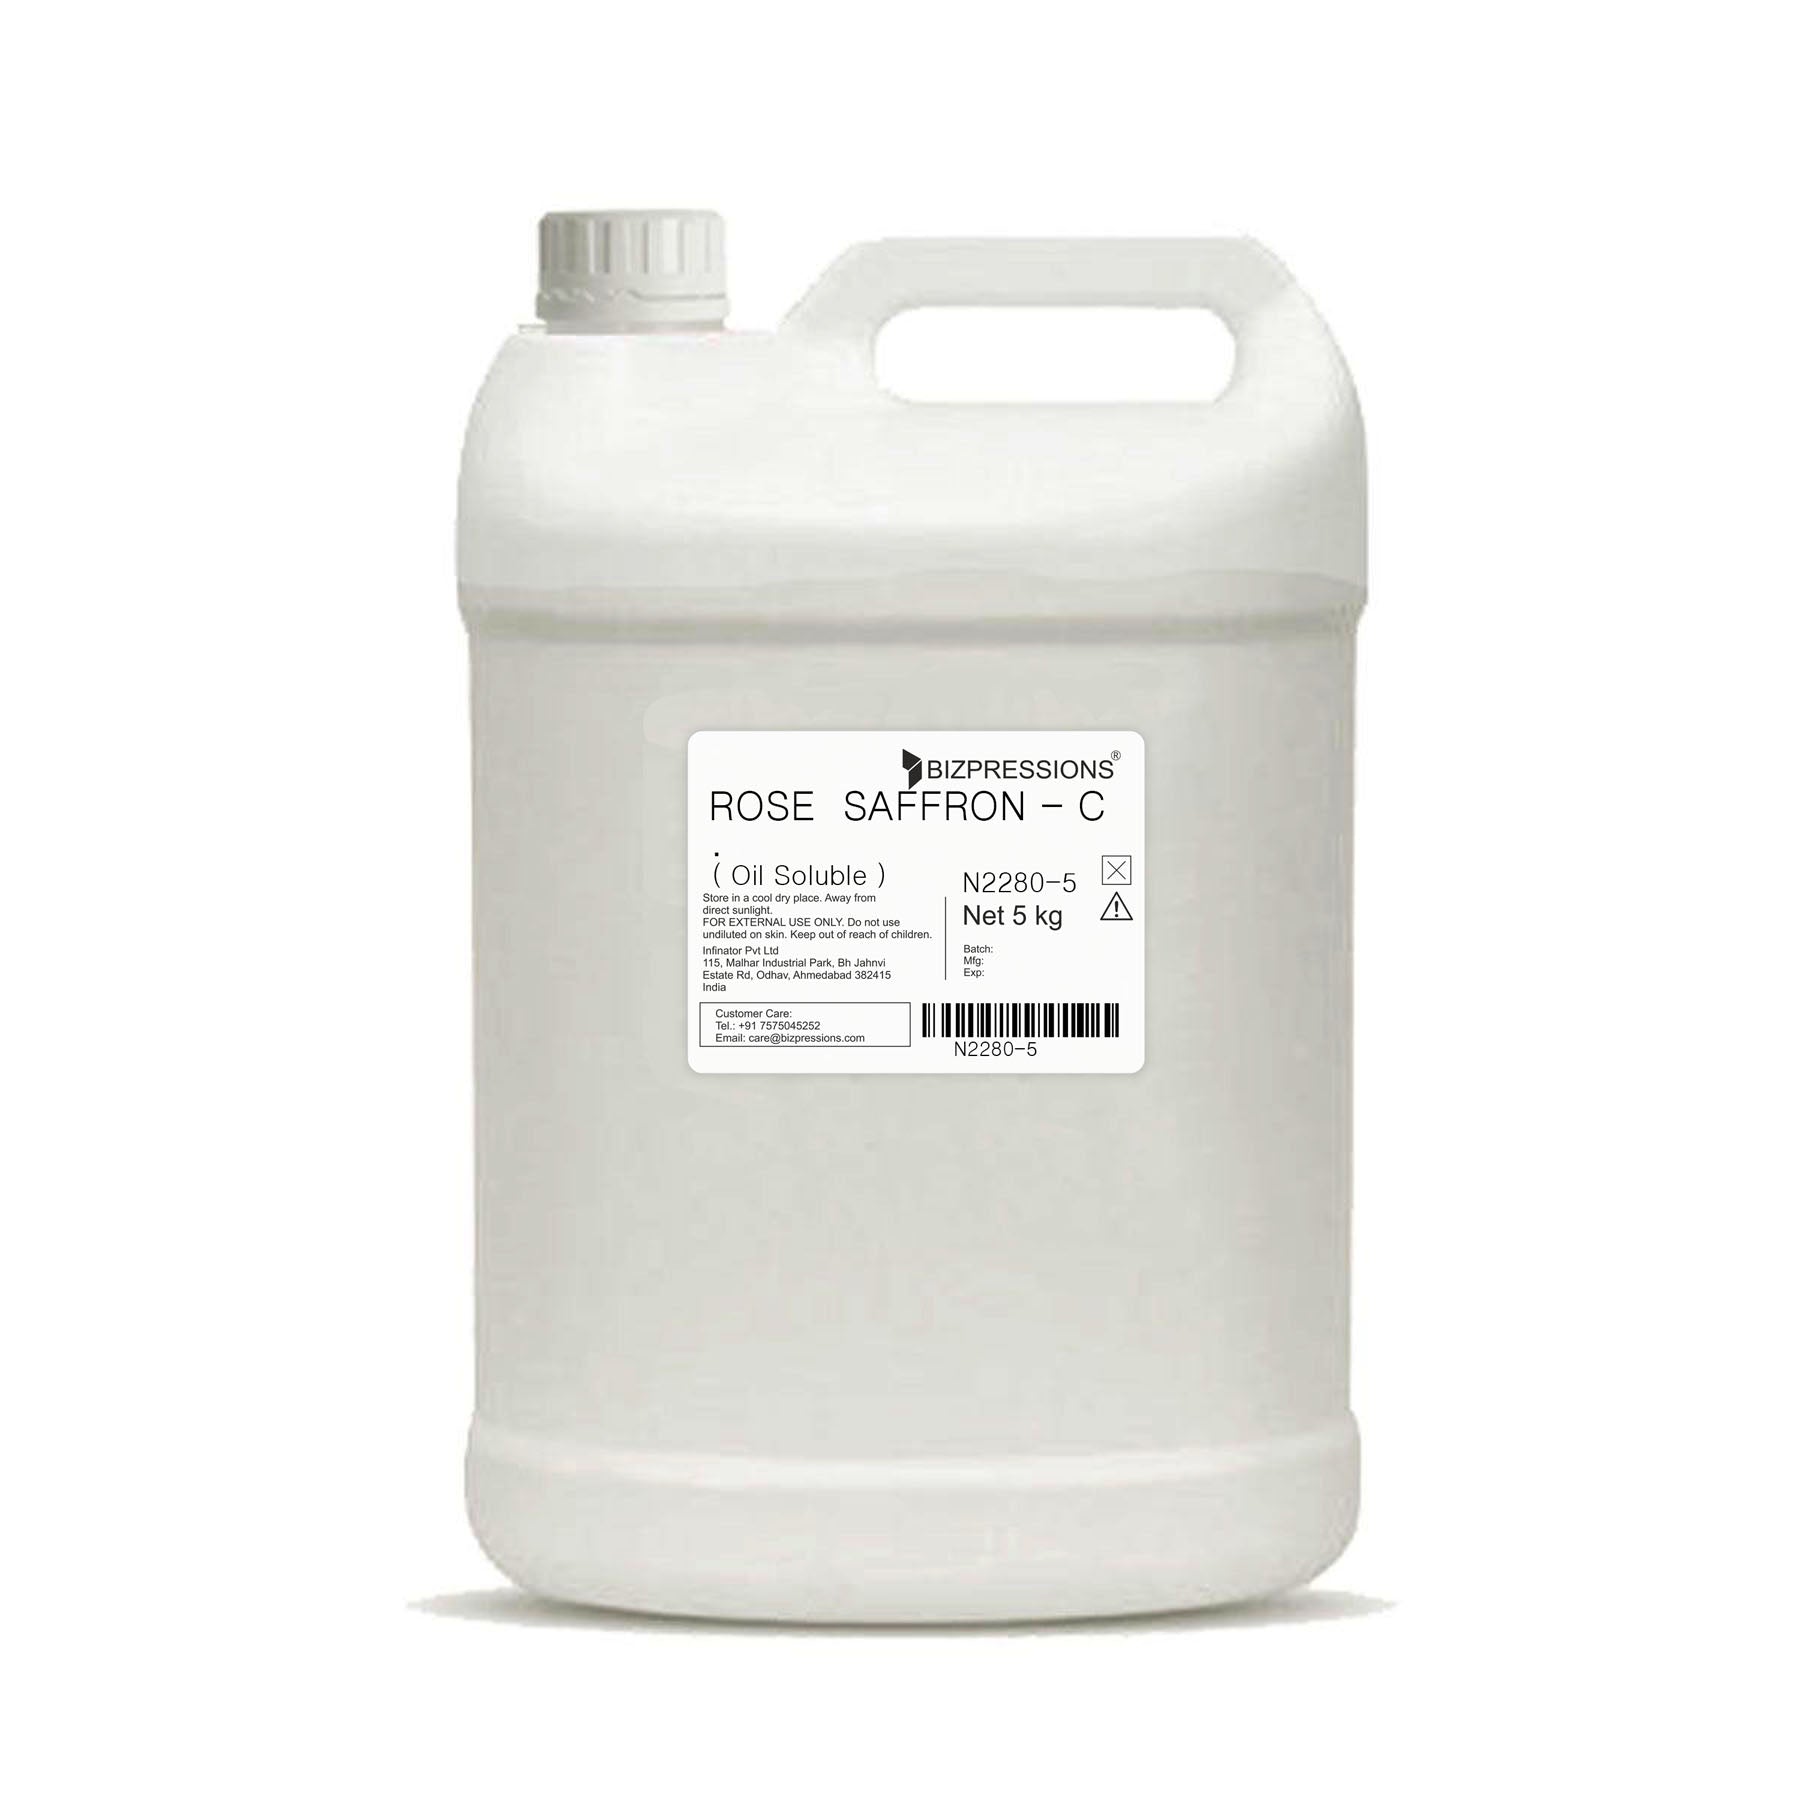 ROSE SAFFRON - C - Fragrance ( Oil Soluble ) - 5 kg